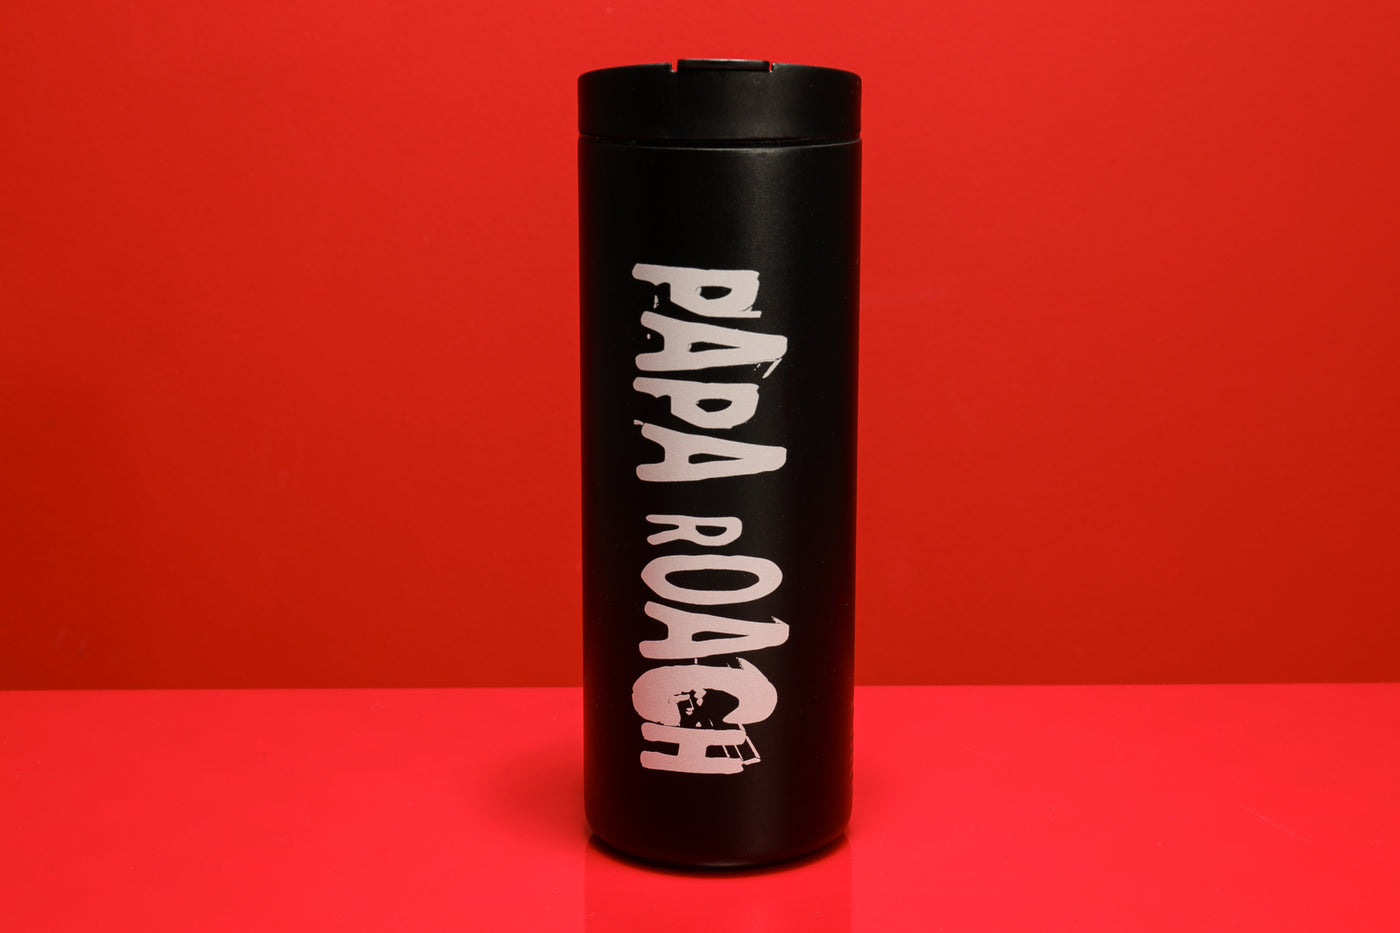 Papa's Roast ‘’Ego Drip’’ Coffee Bundle